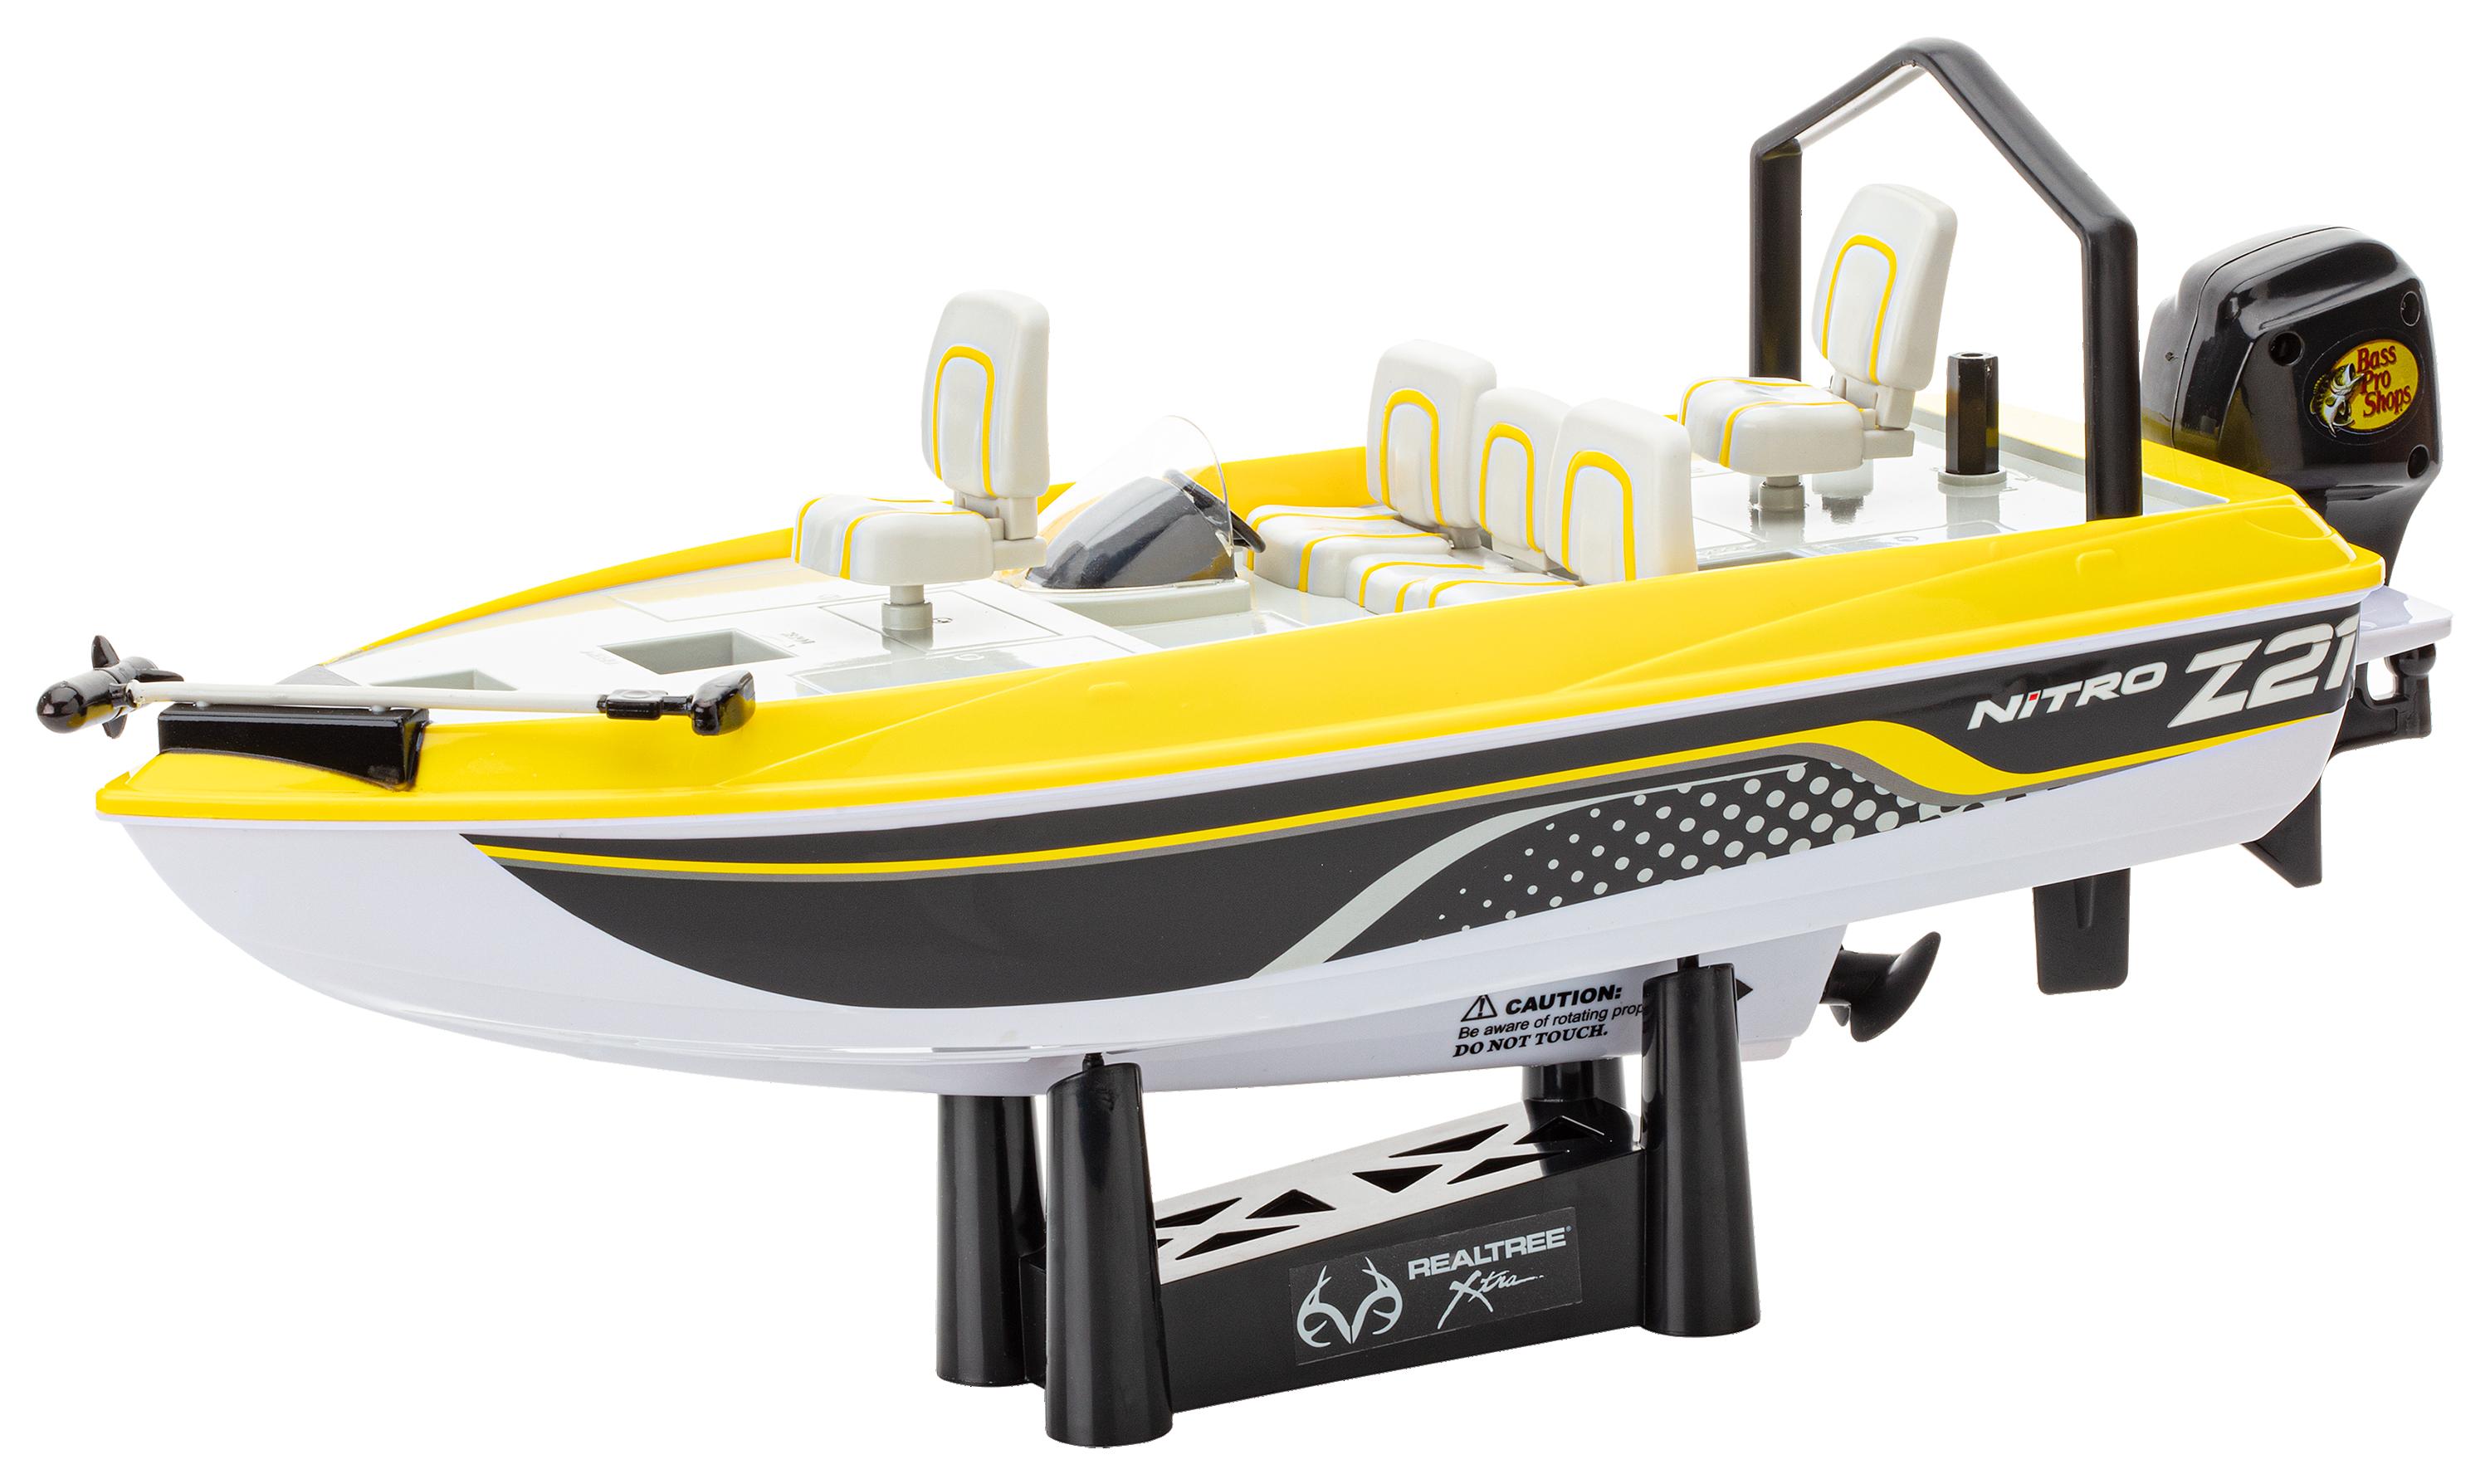 Rc Fishing Surfer Boat: Enhance Your Fishing Experience with RC Fishing Surfer Boat